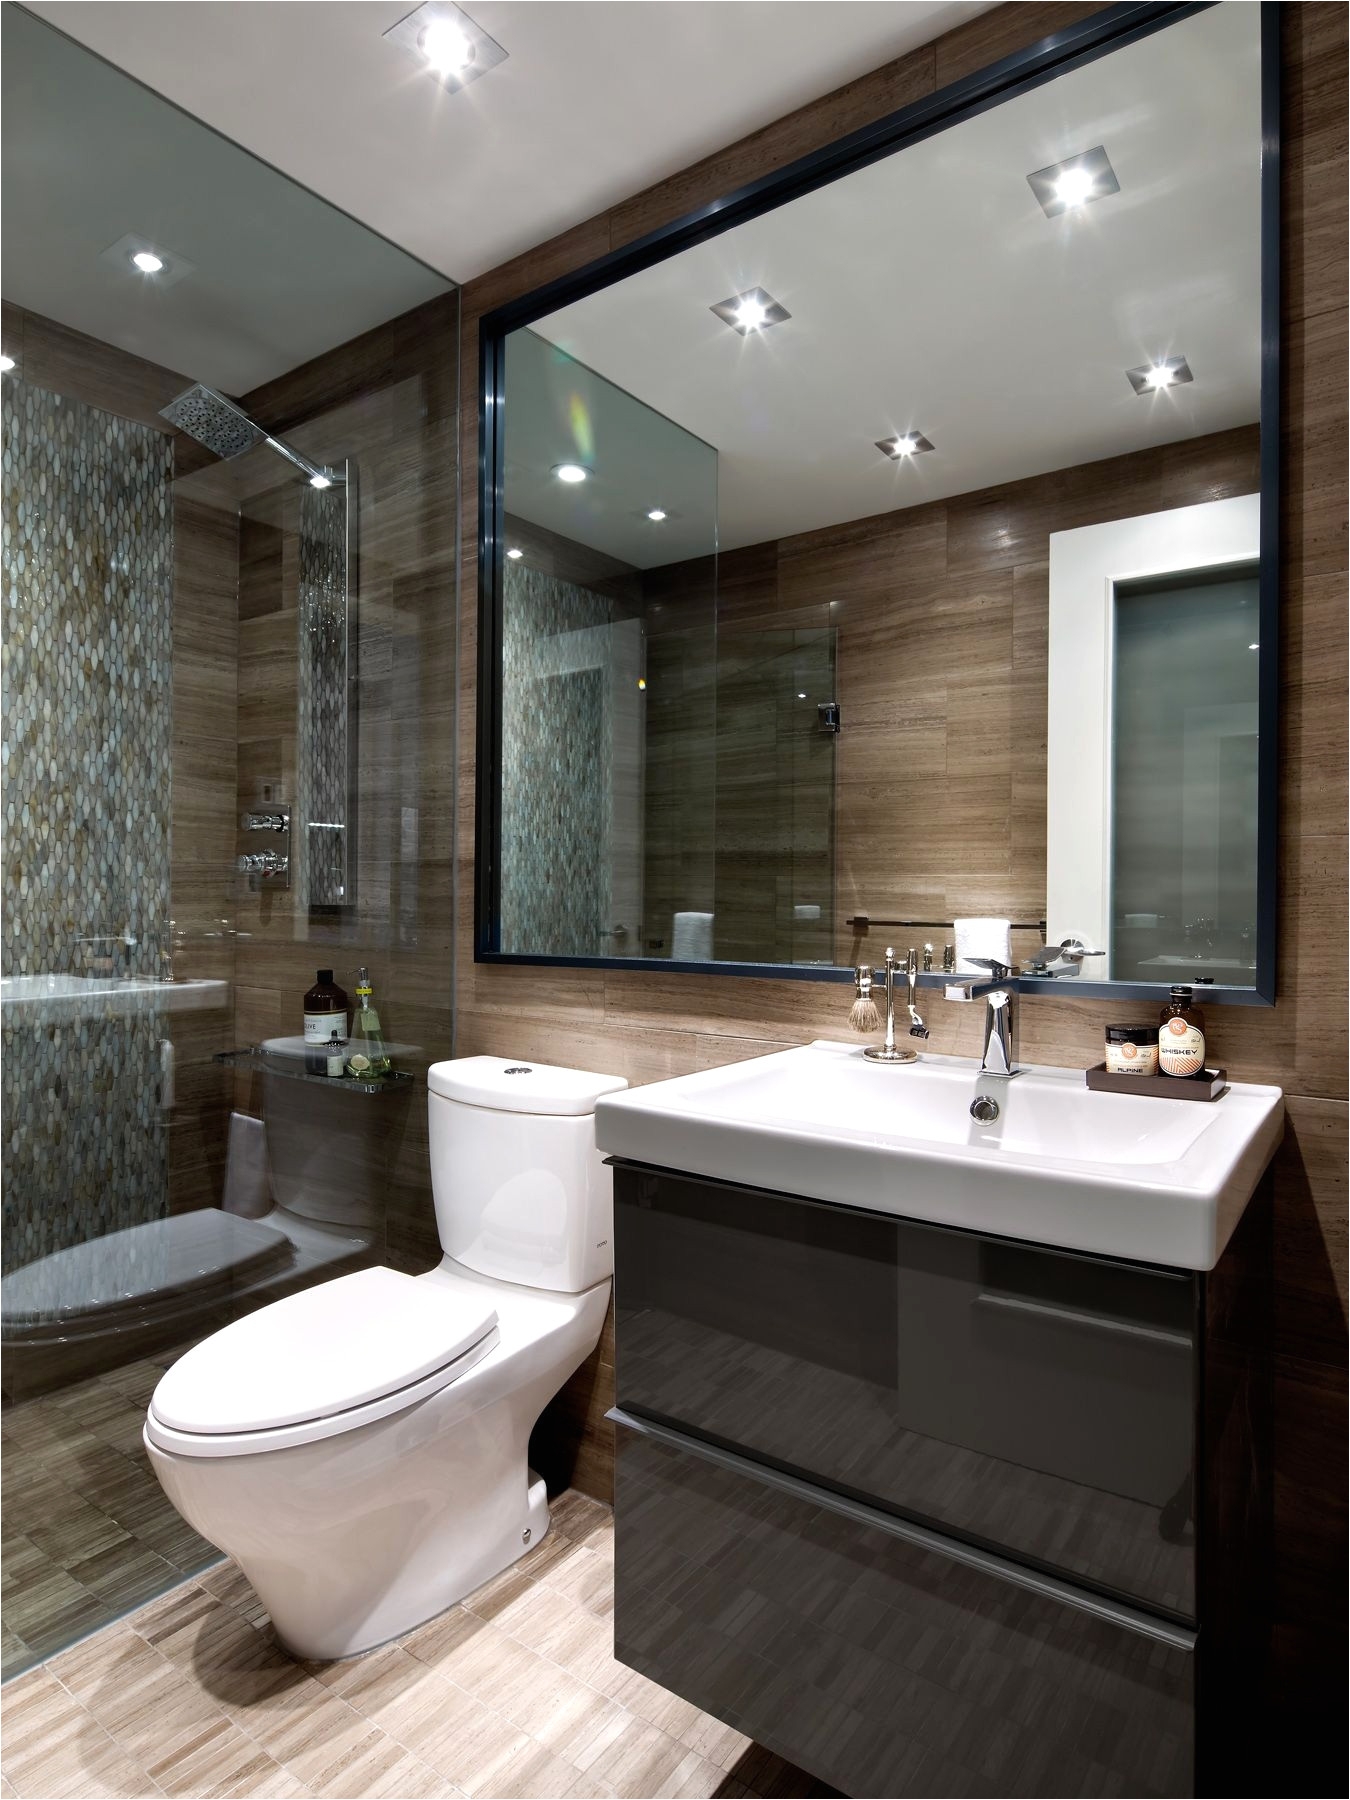 Outstanding Good Bathroom Lighting within Lovely Small Bathroom Lighting Fresh Tag toilet Ideas 0d Best Design